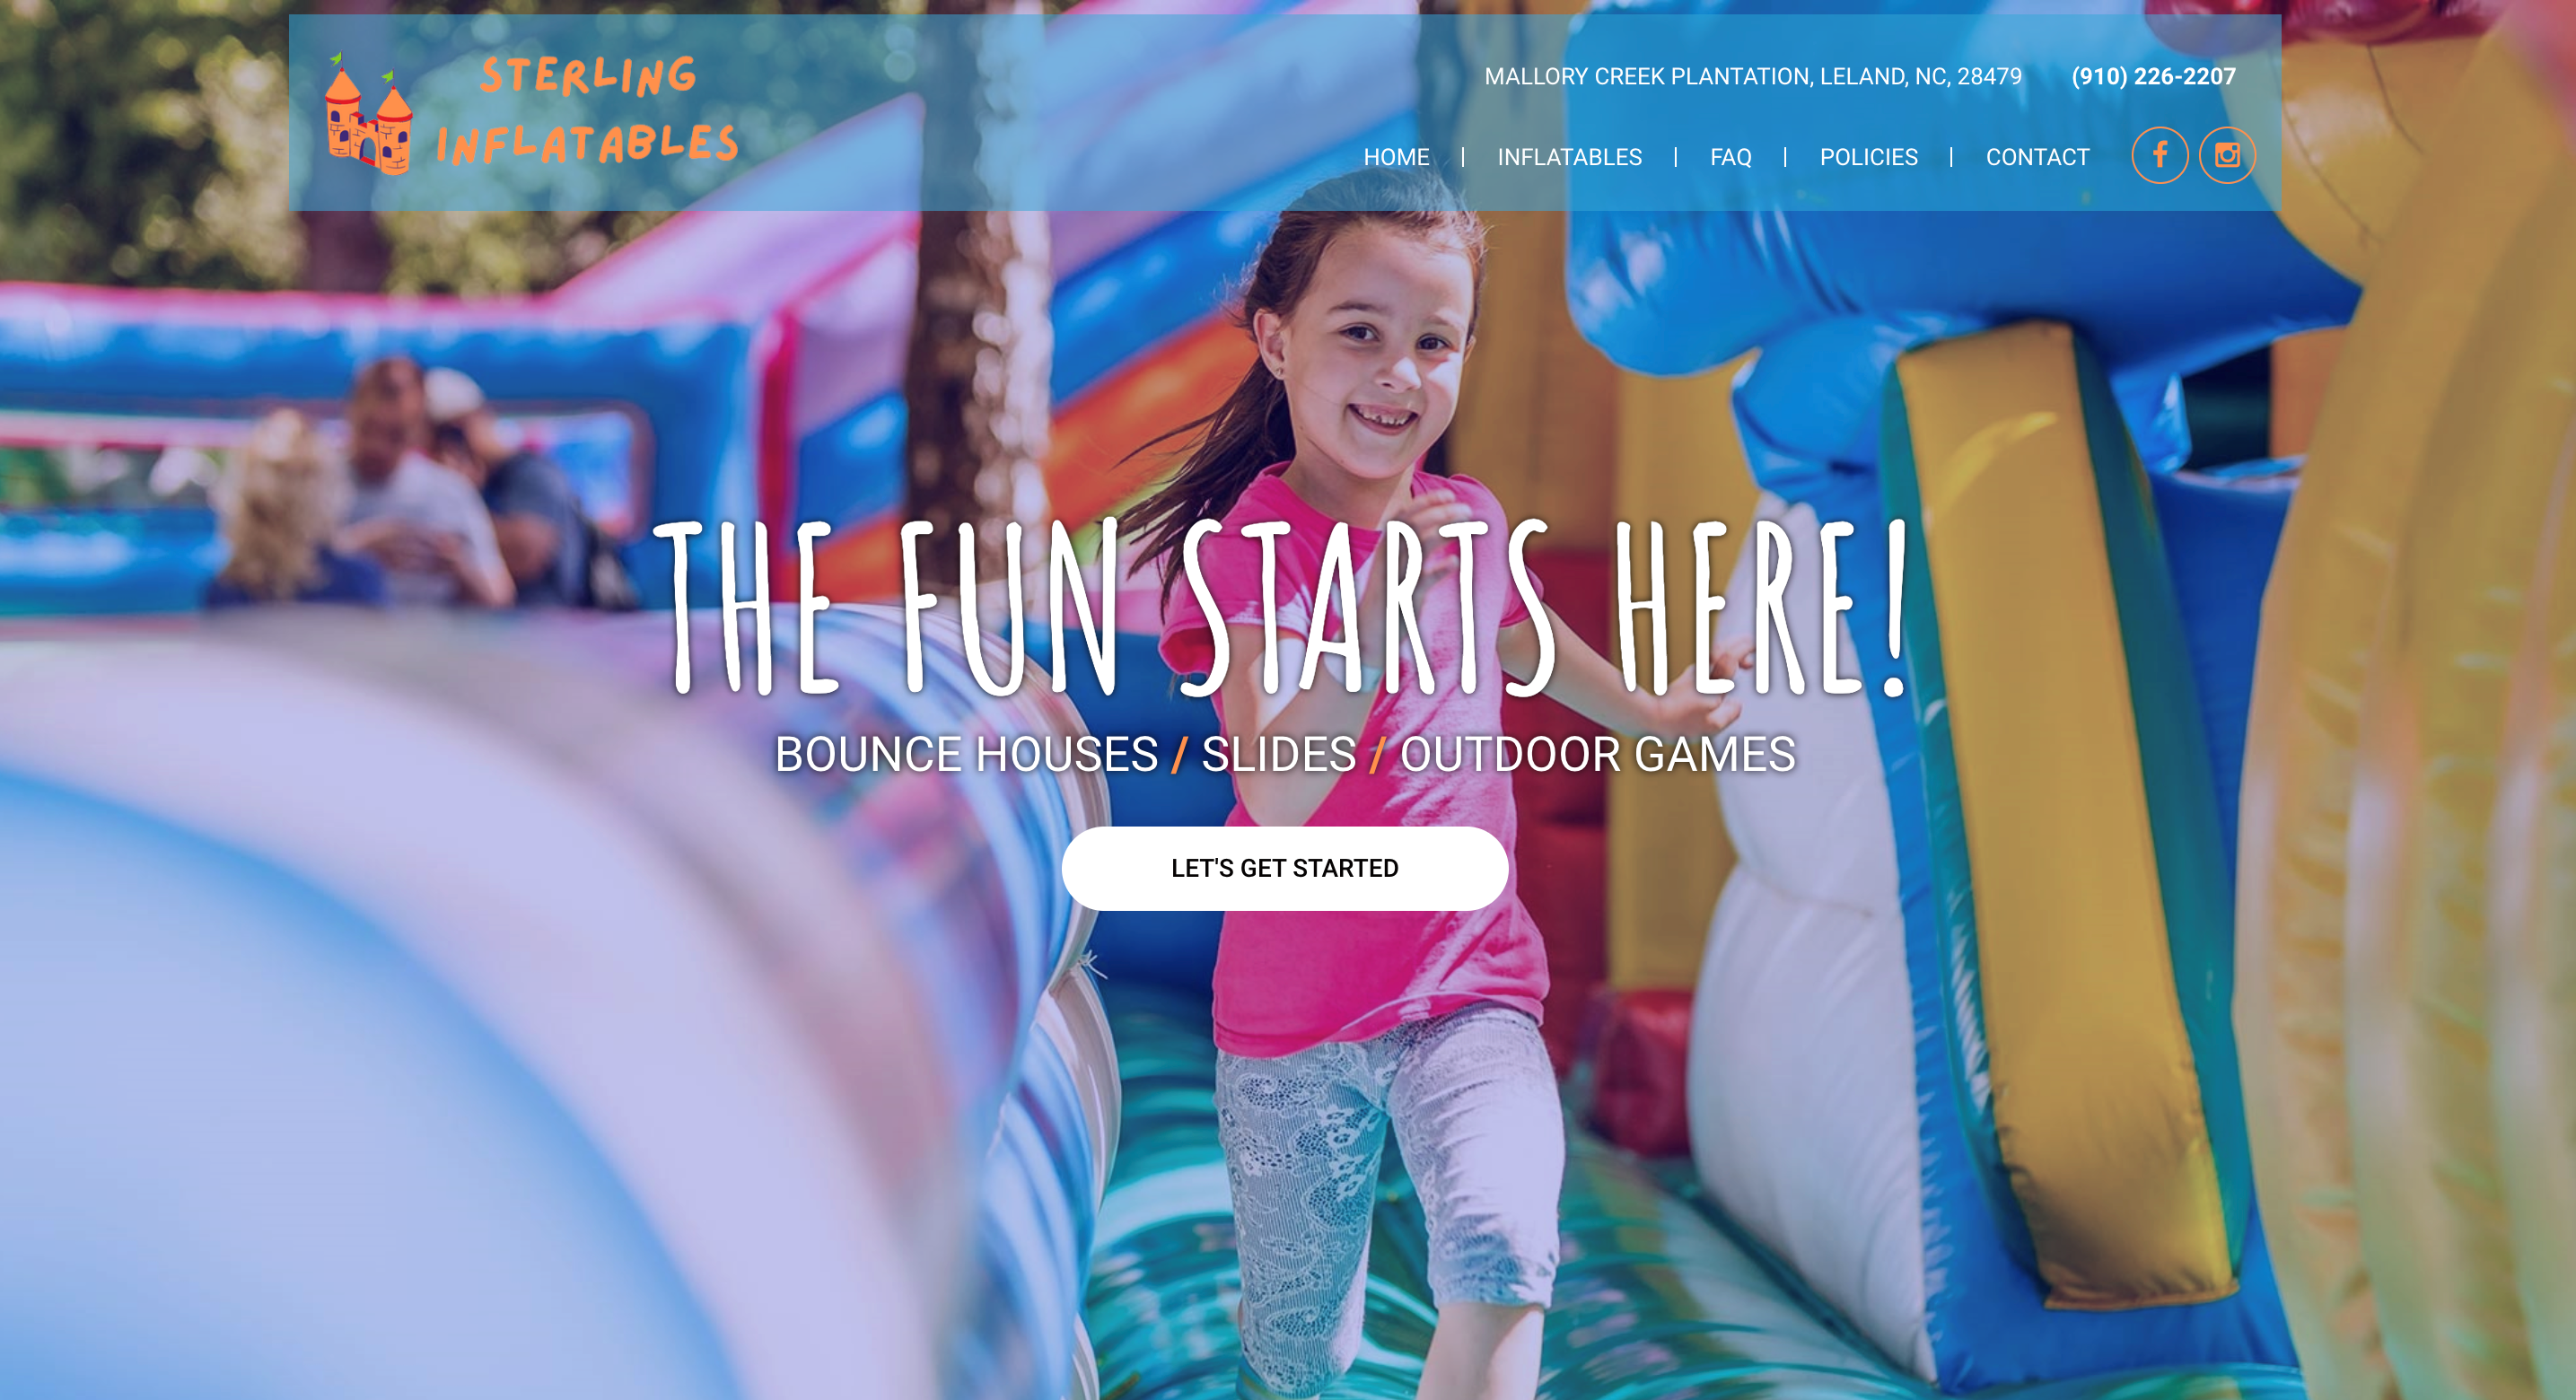 Screenshot of Sterling Inflatables website